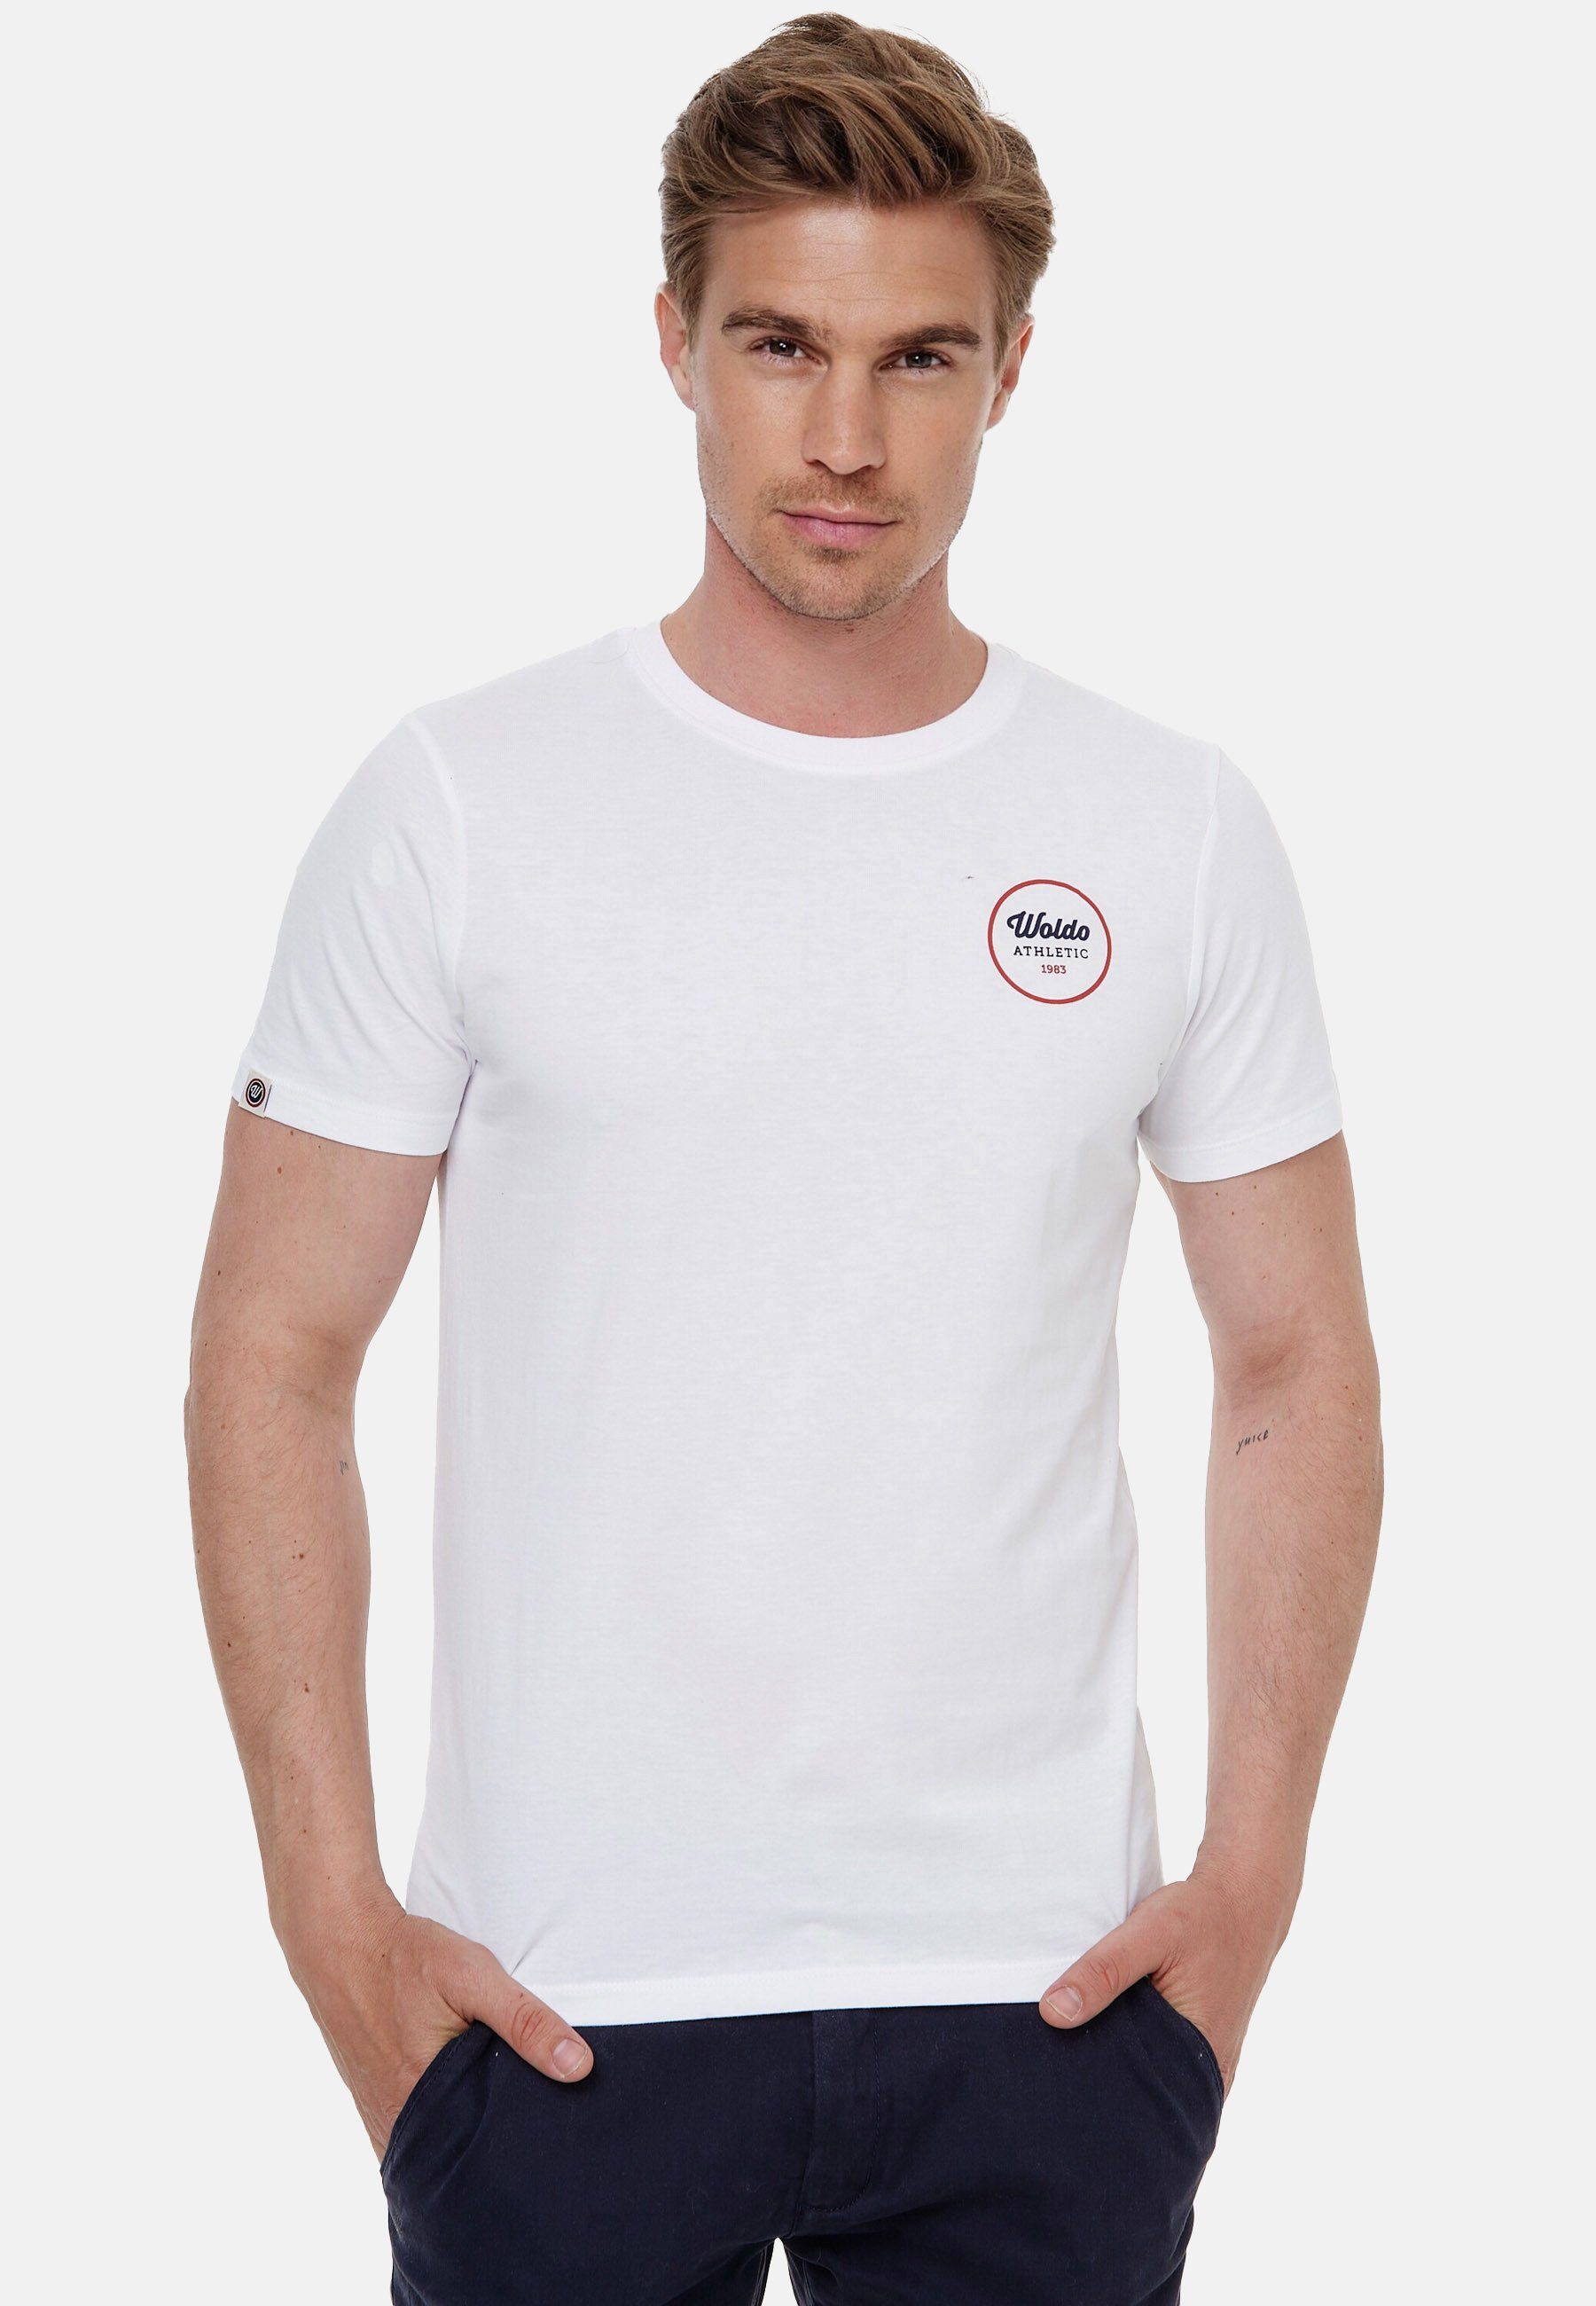 Woldo Athletic T-Shirt T-Shirt Print Runder weiß